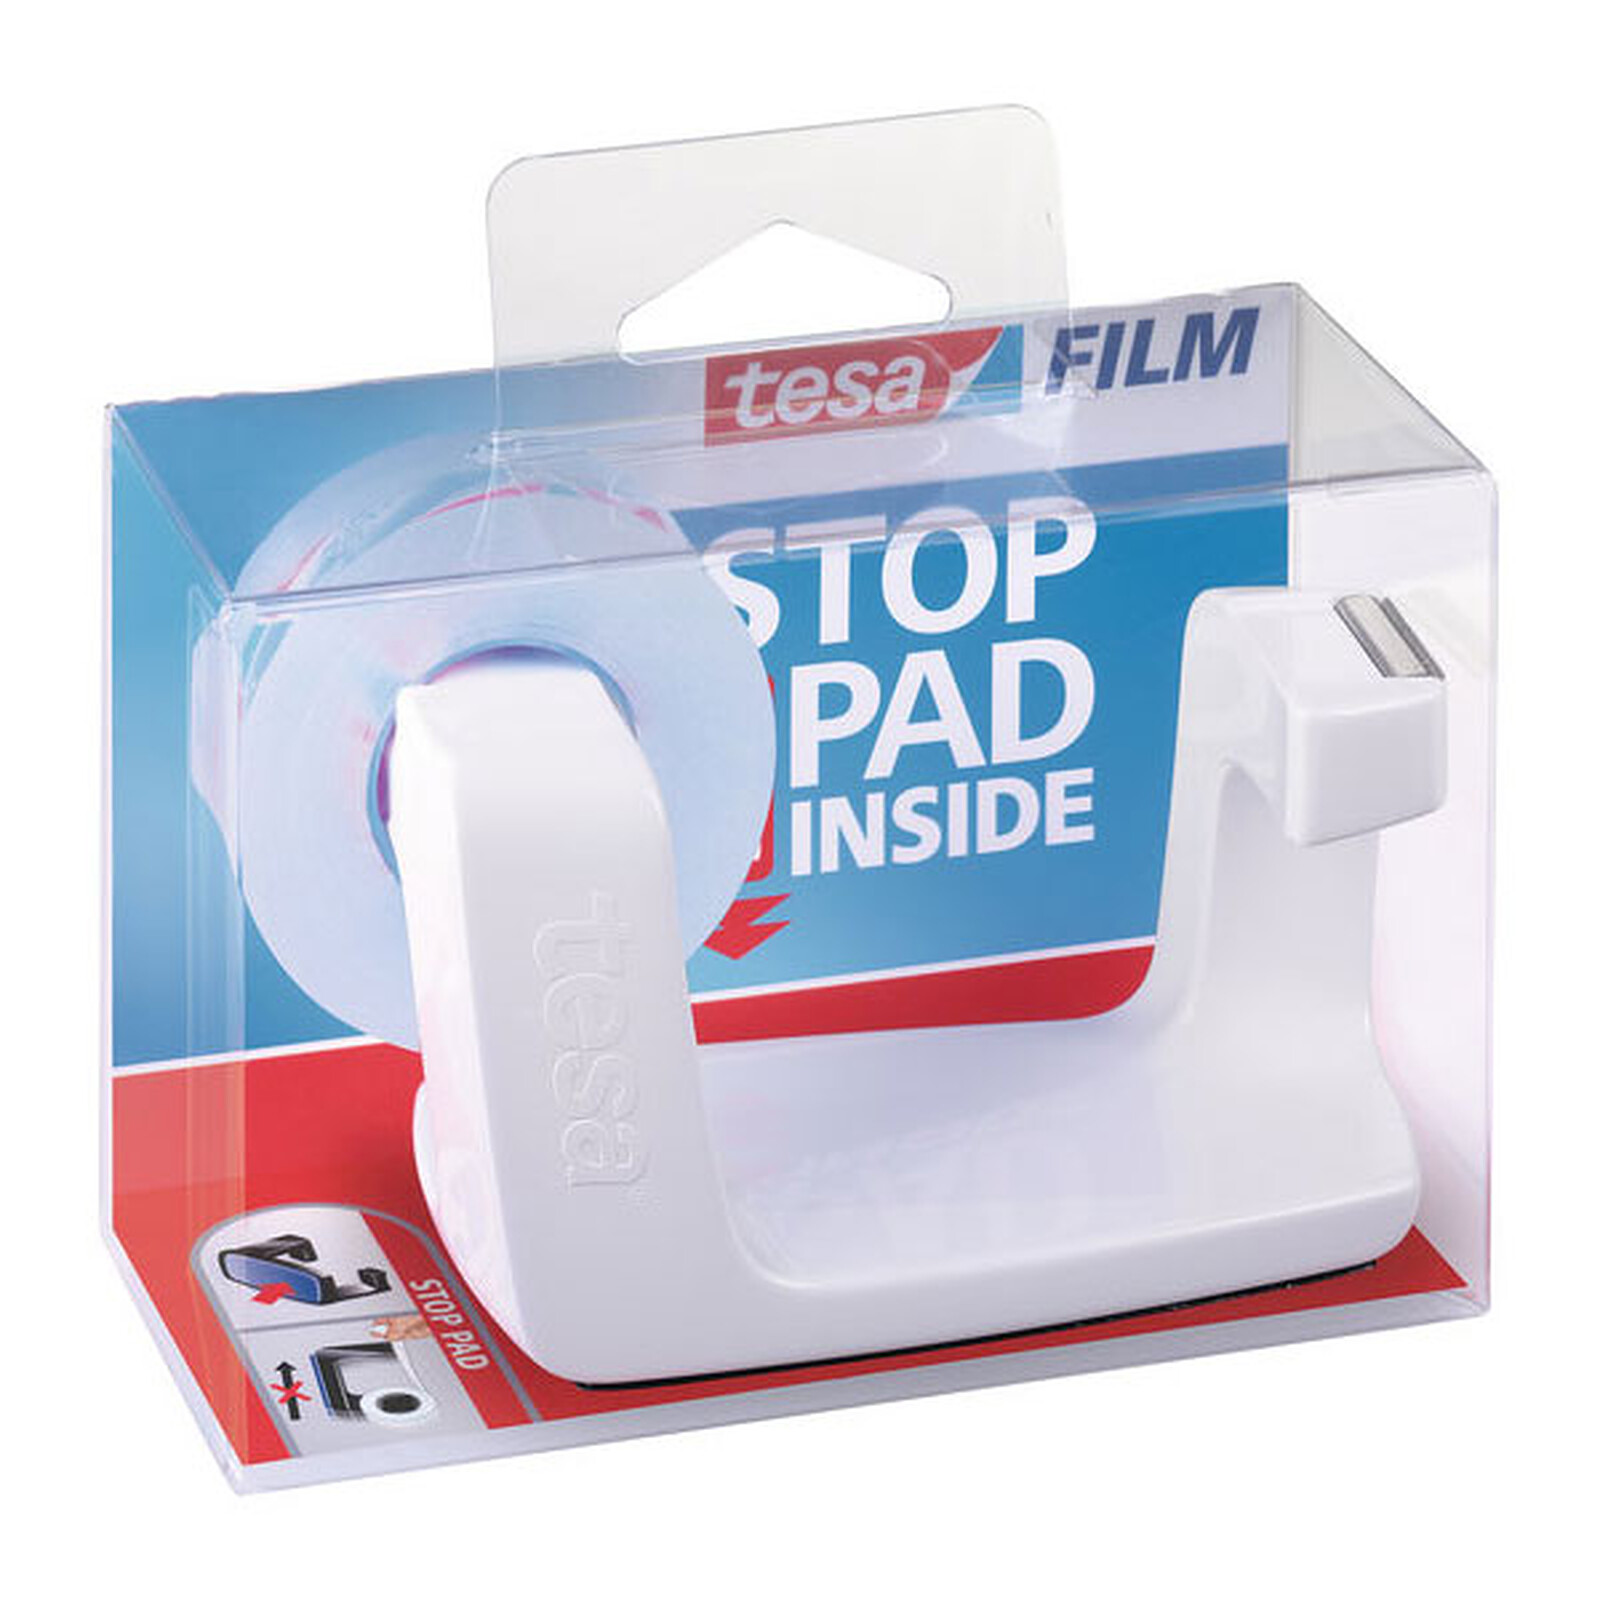 tesa Tesafilm Eco&Clear 1 rouleau 33m x 19mm + 1 dérouleur - Ruban adhésif  & colle - LDLC